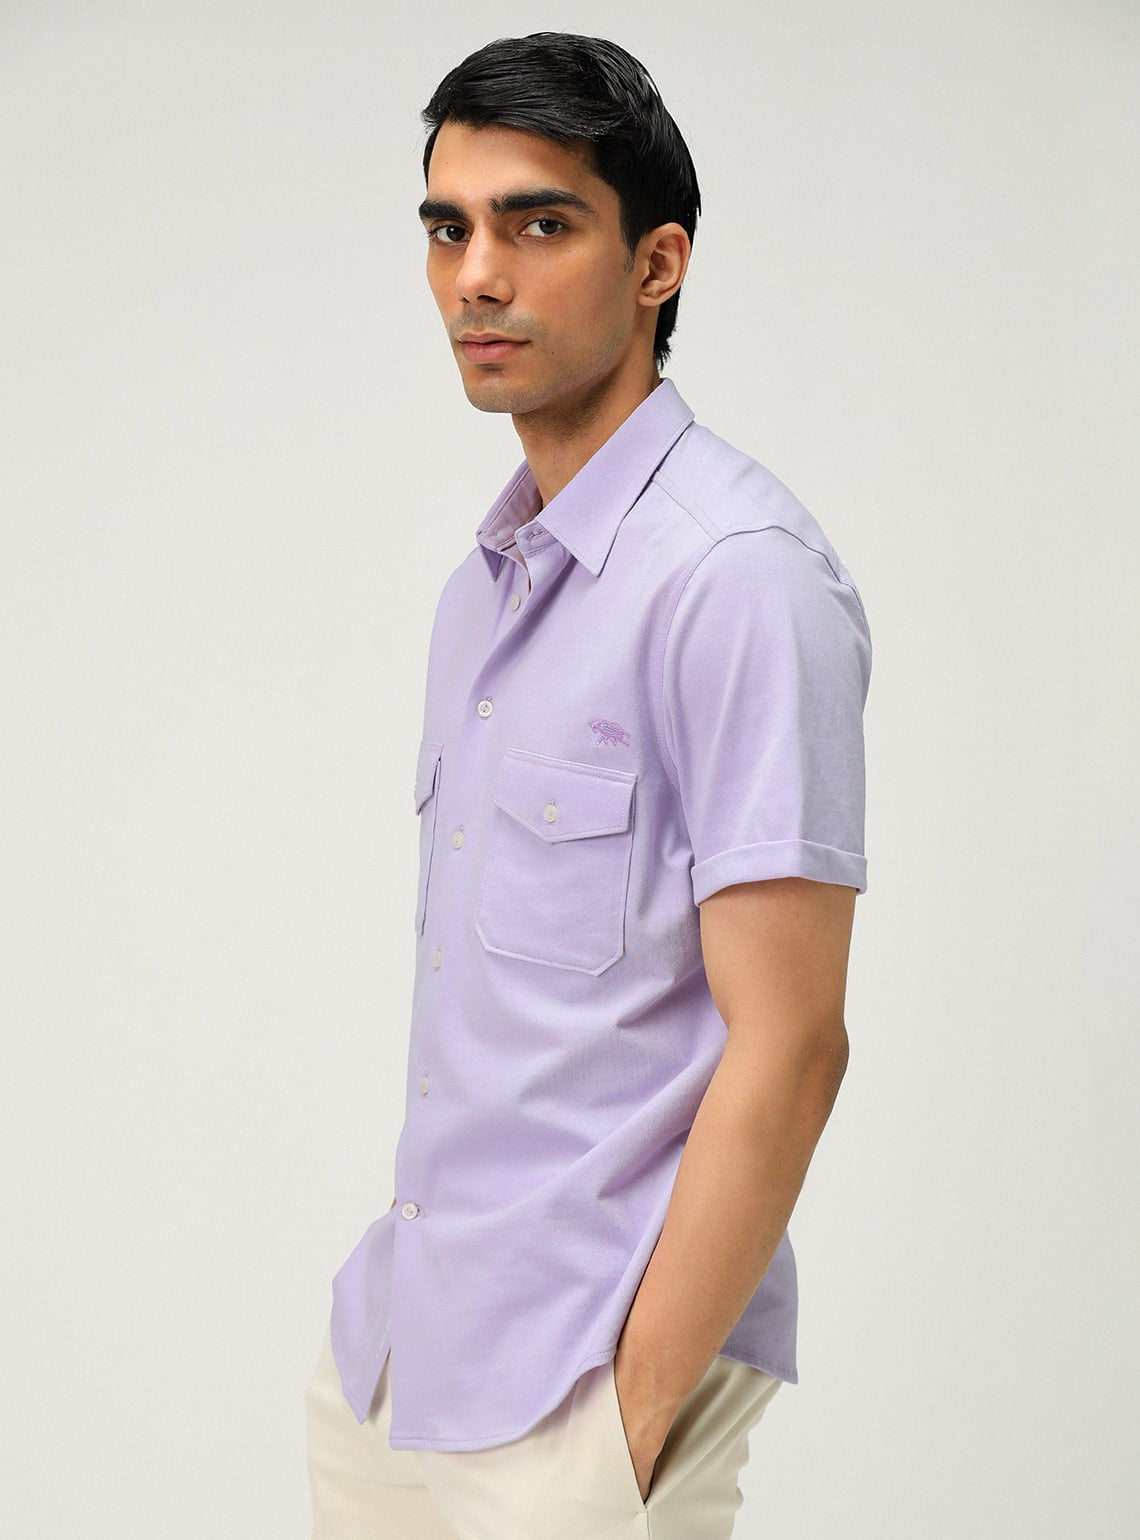 English Lavender Shirt-Half